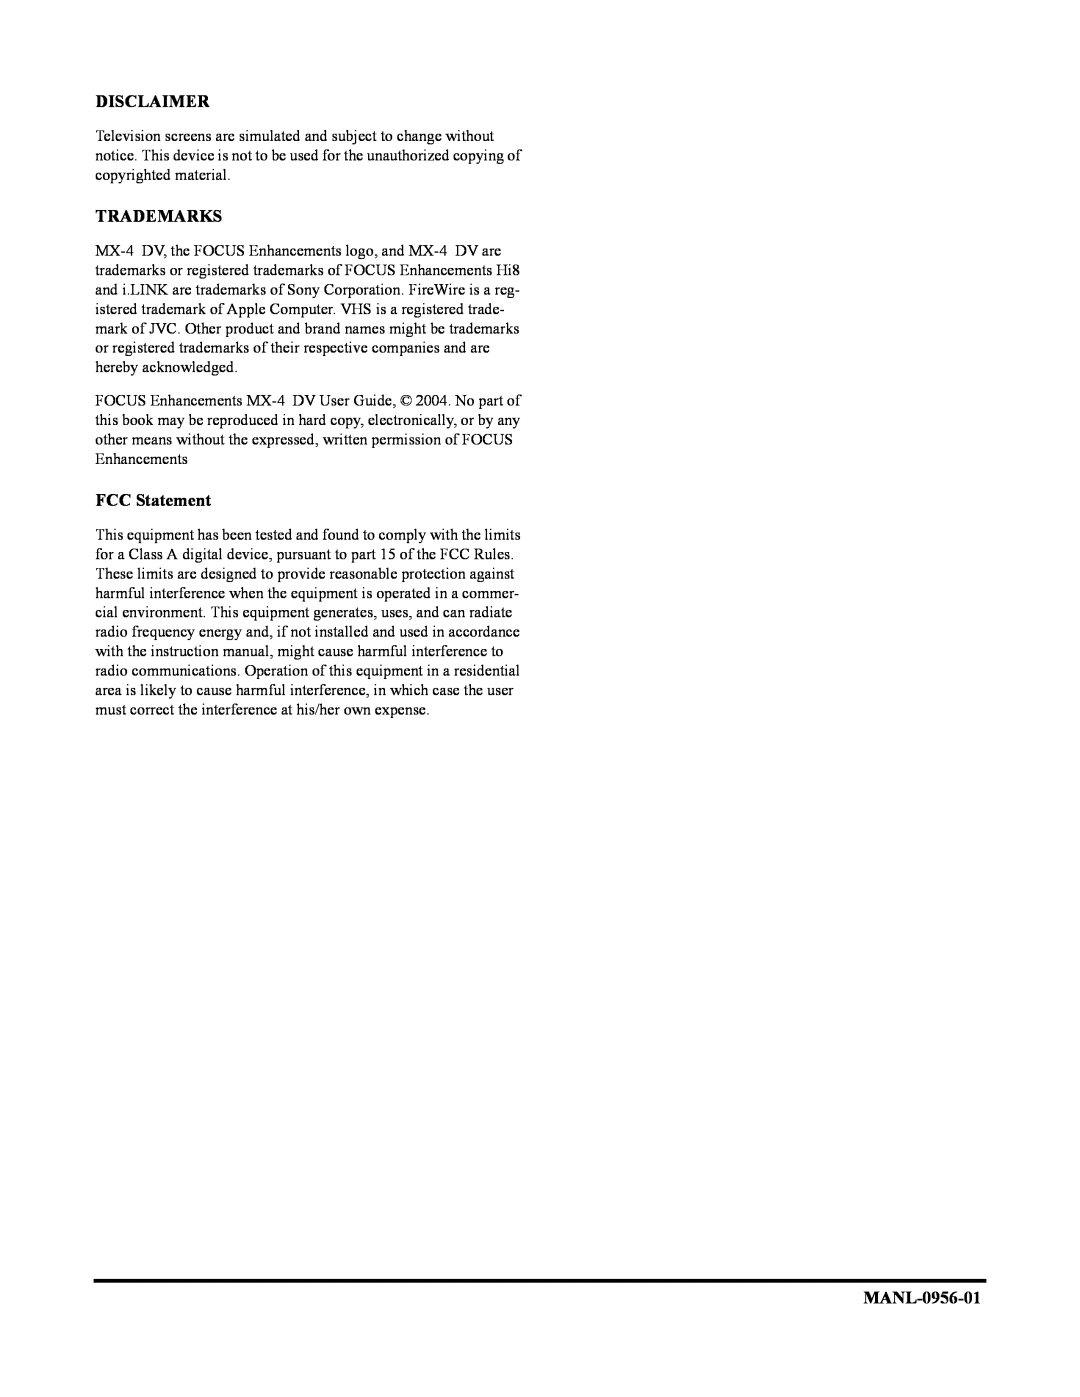 FOCUS Enhancements MX-4DV manual Disclaimer, Trademarks, FCC Statement, MANL-0956-01 